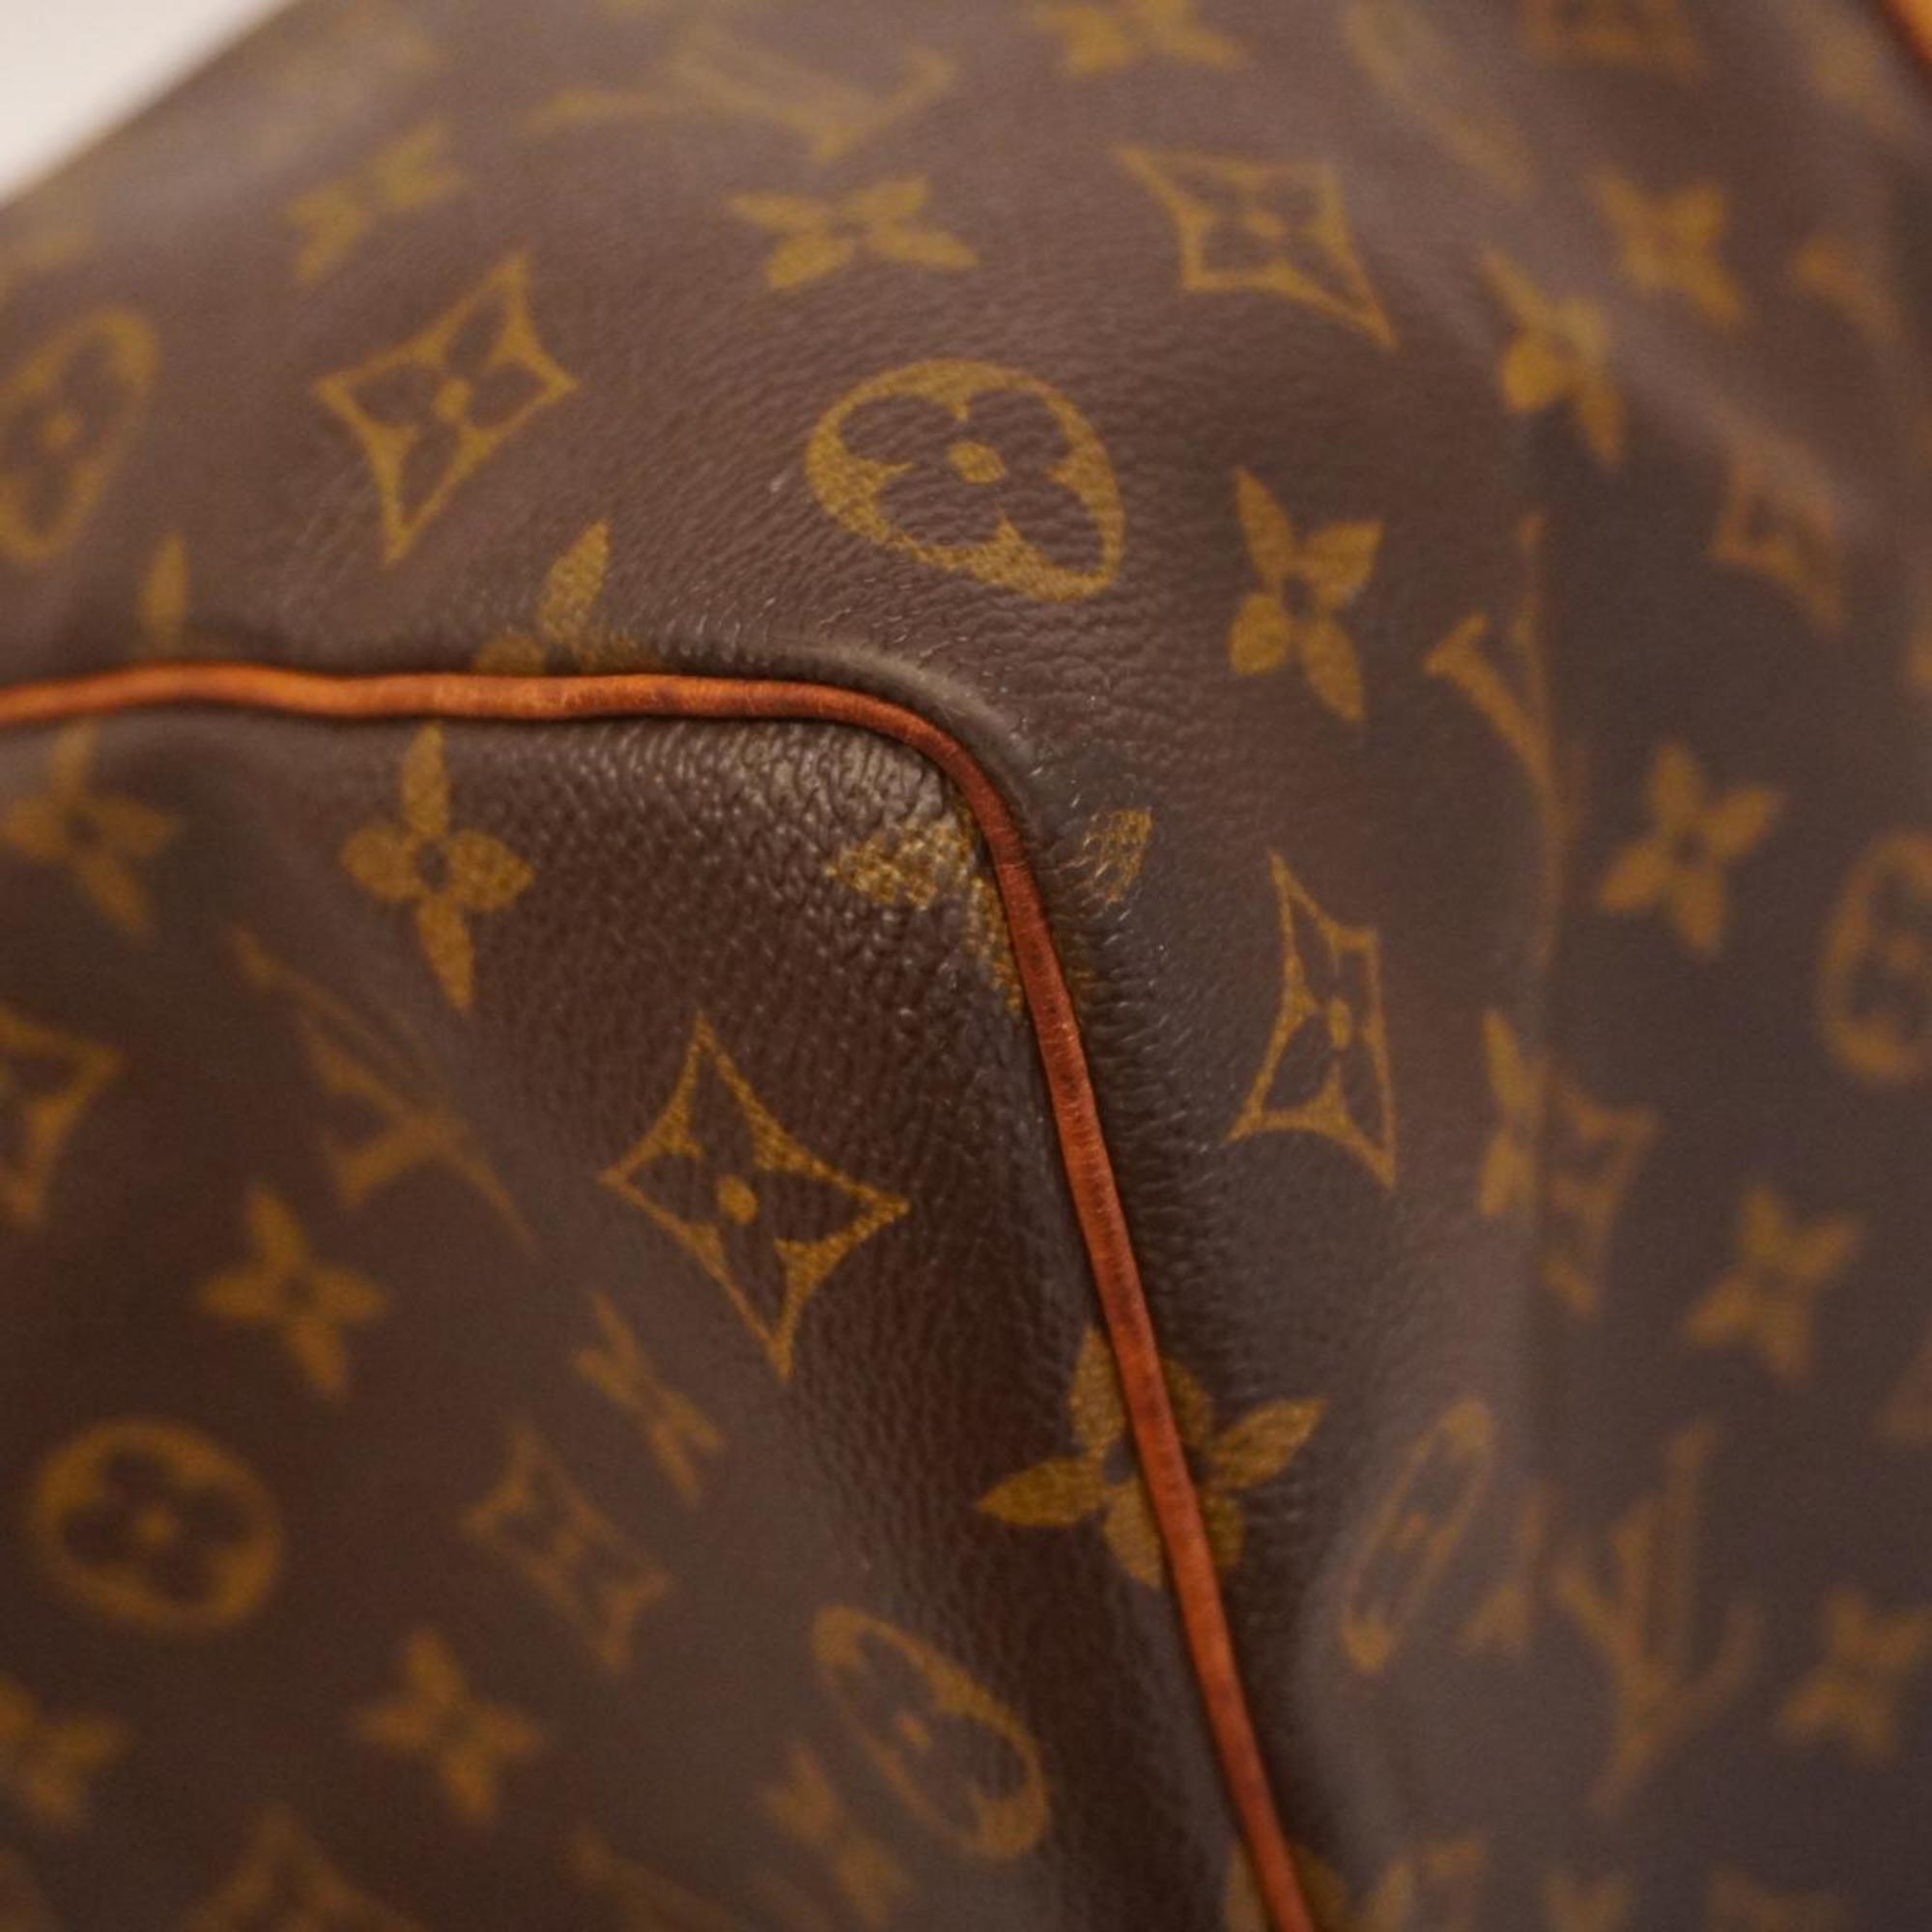 Louis Vuitton Boston Bag Monogram Keepall 50 M41426 Brown Men's Women's